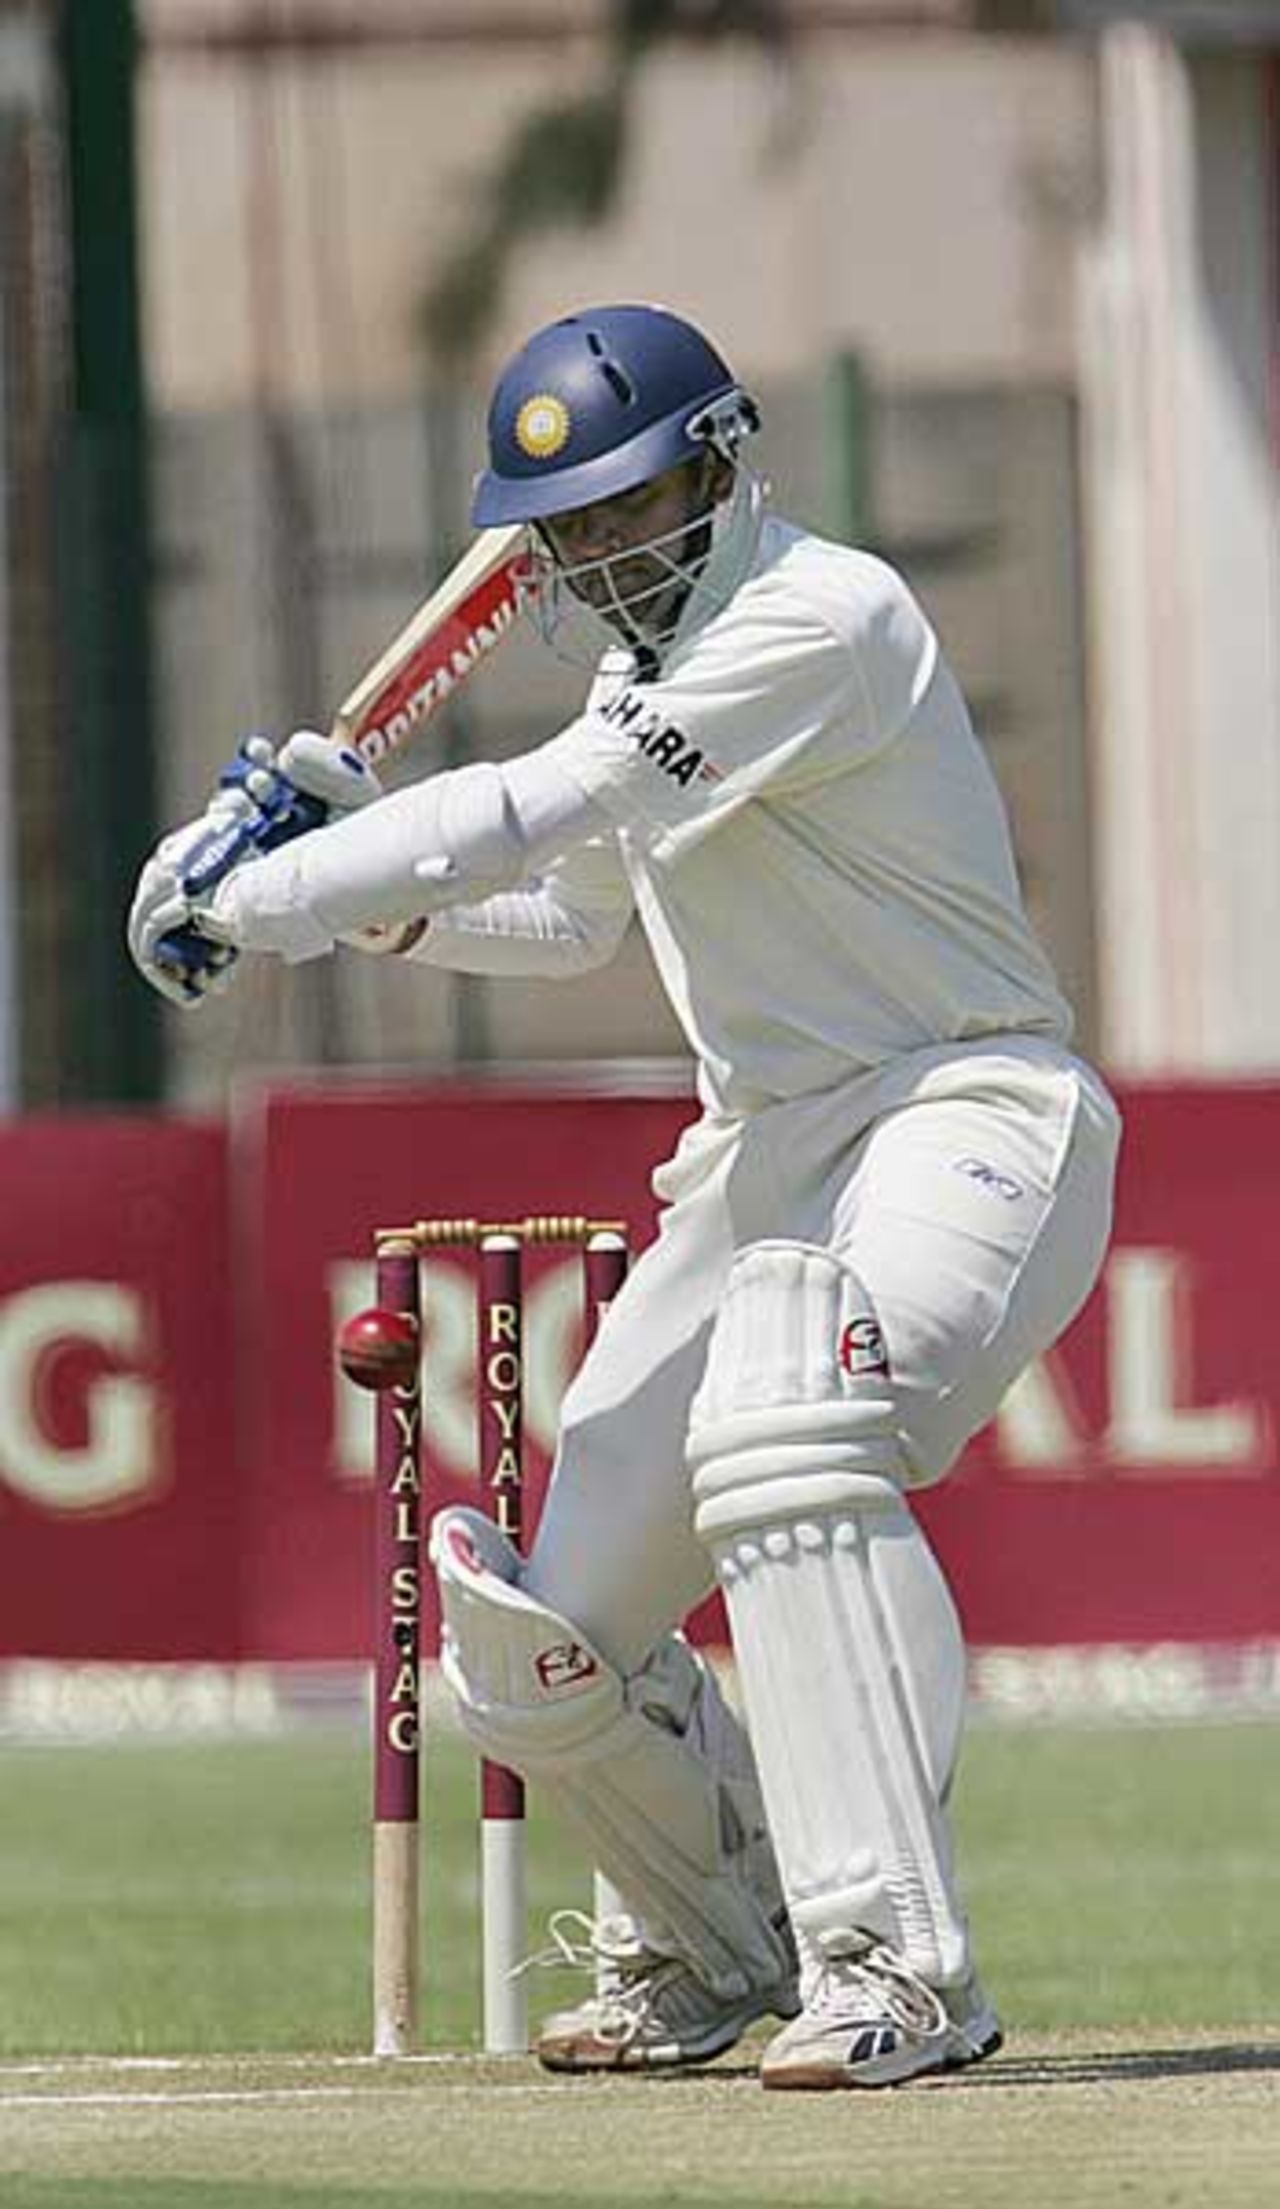 Rahul Dravid goes back to cut the ball, Zimbabwe v India, Harare, September 21, 2005